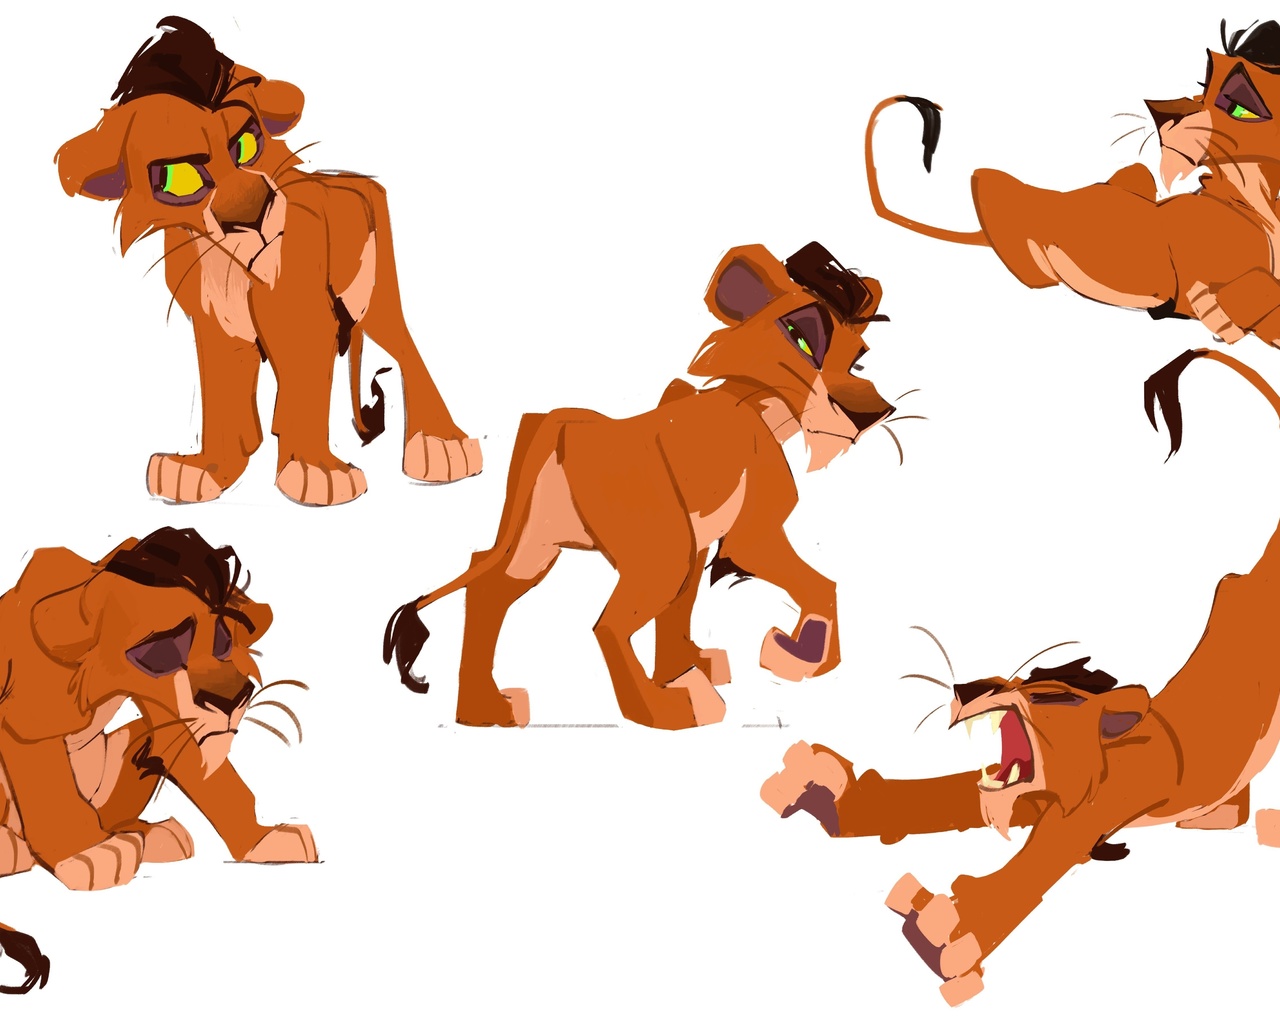 the lion king, animated musical drama film, art